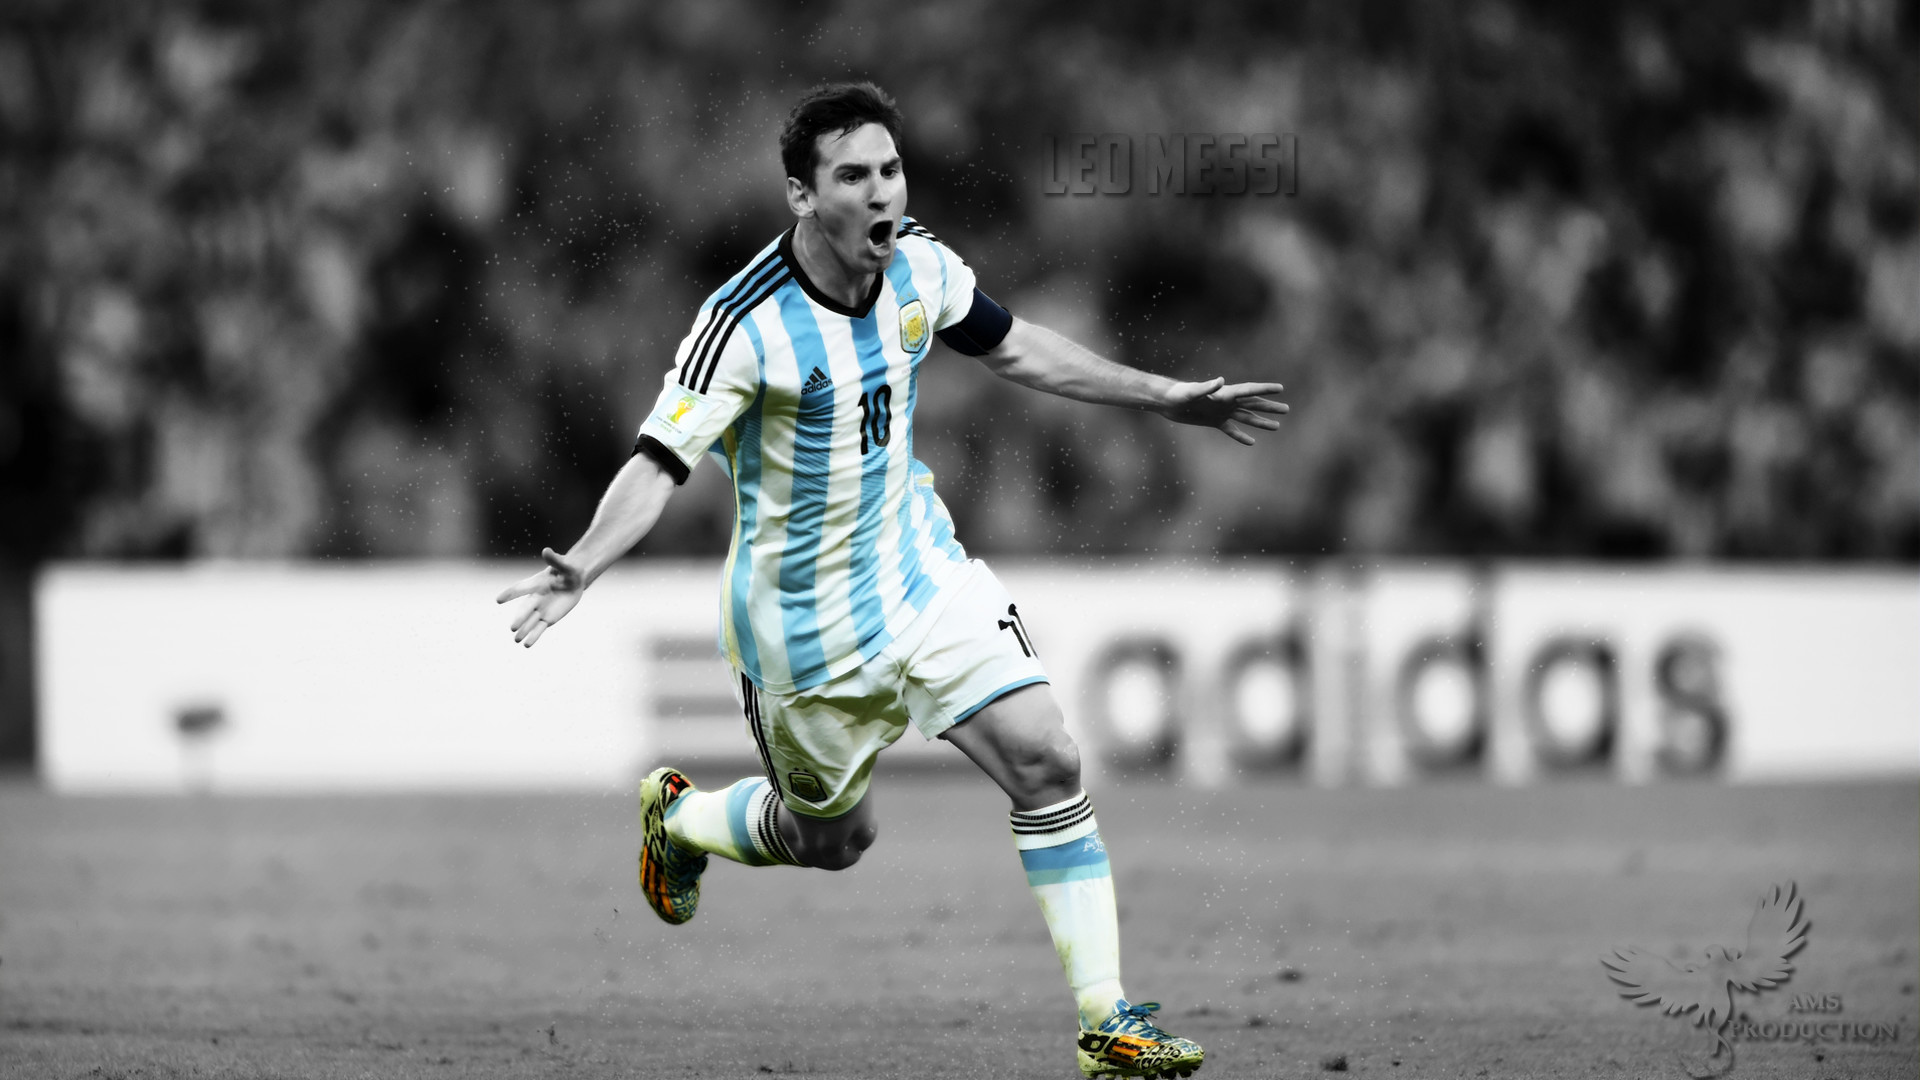 1920x1080 Leo Messi Argentina World Cup celebration